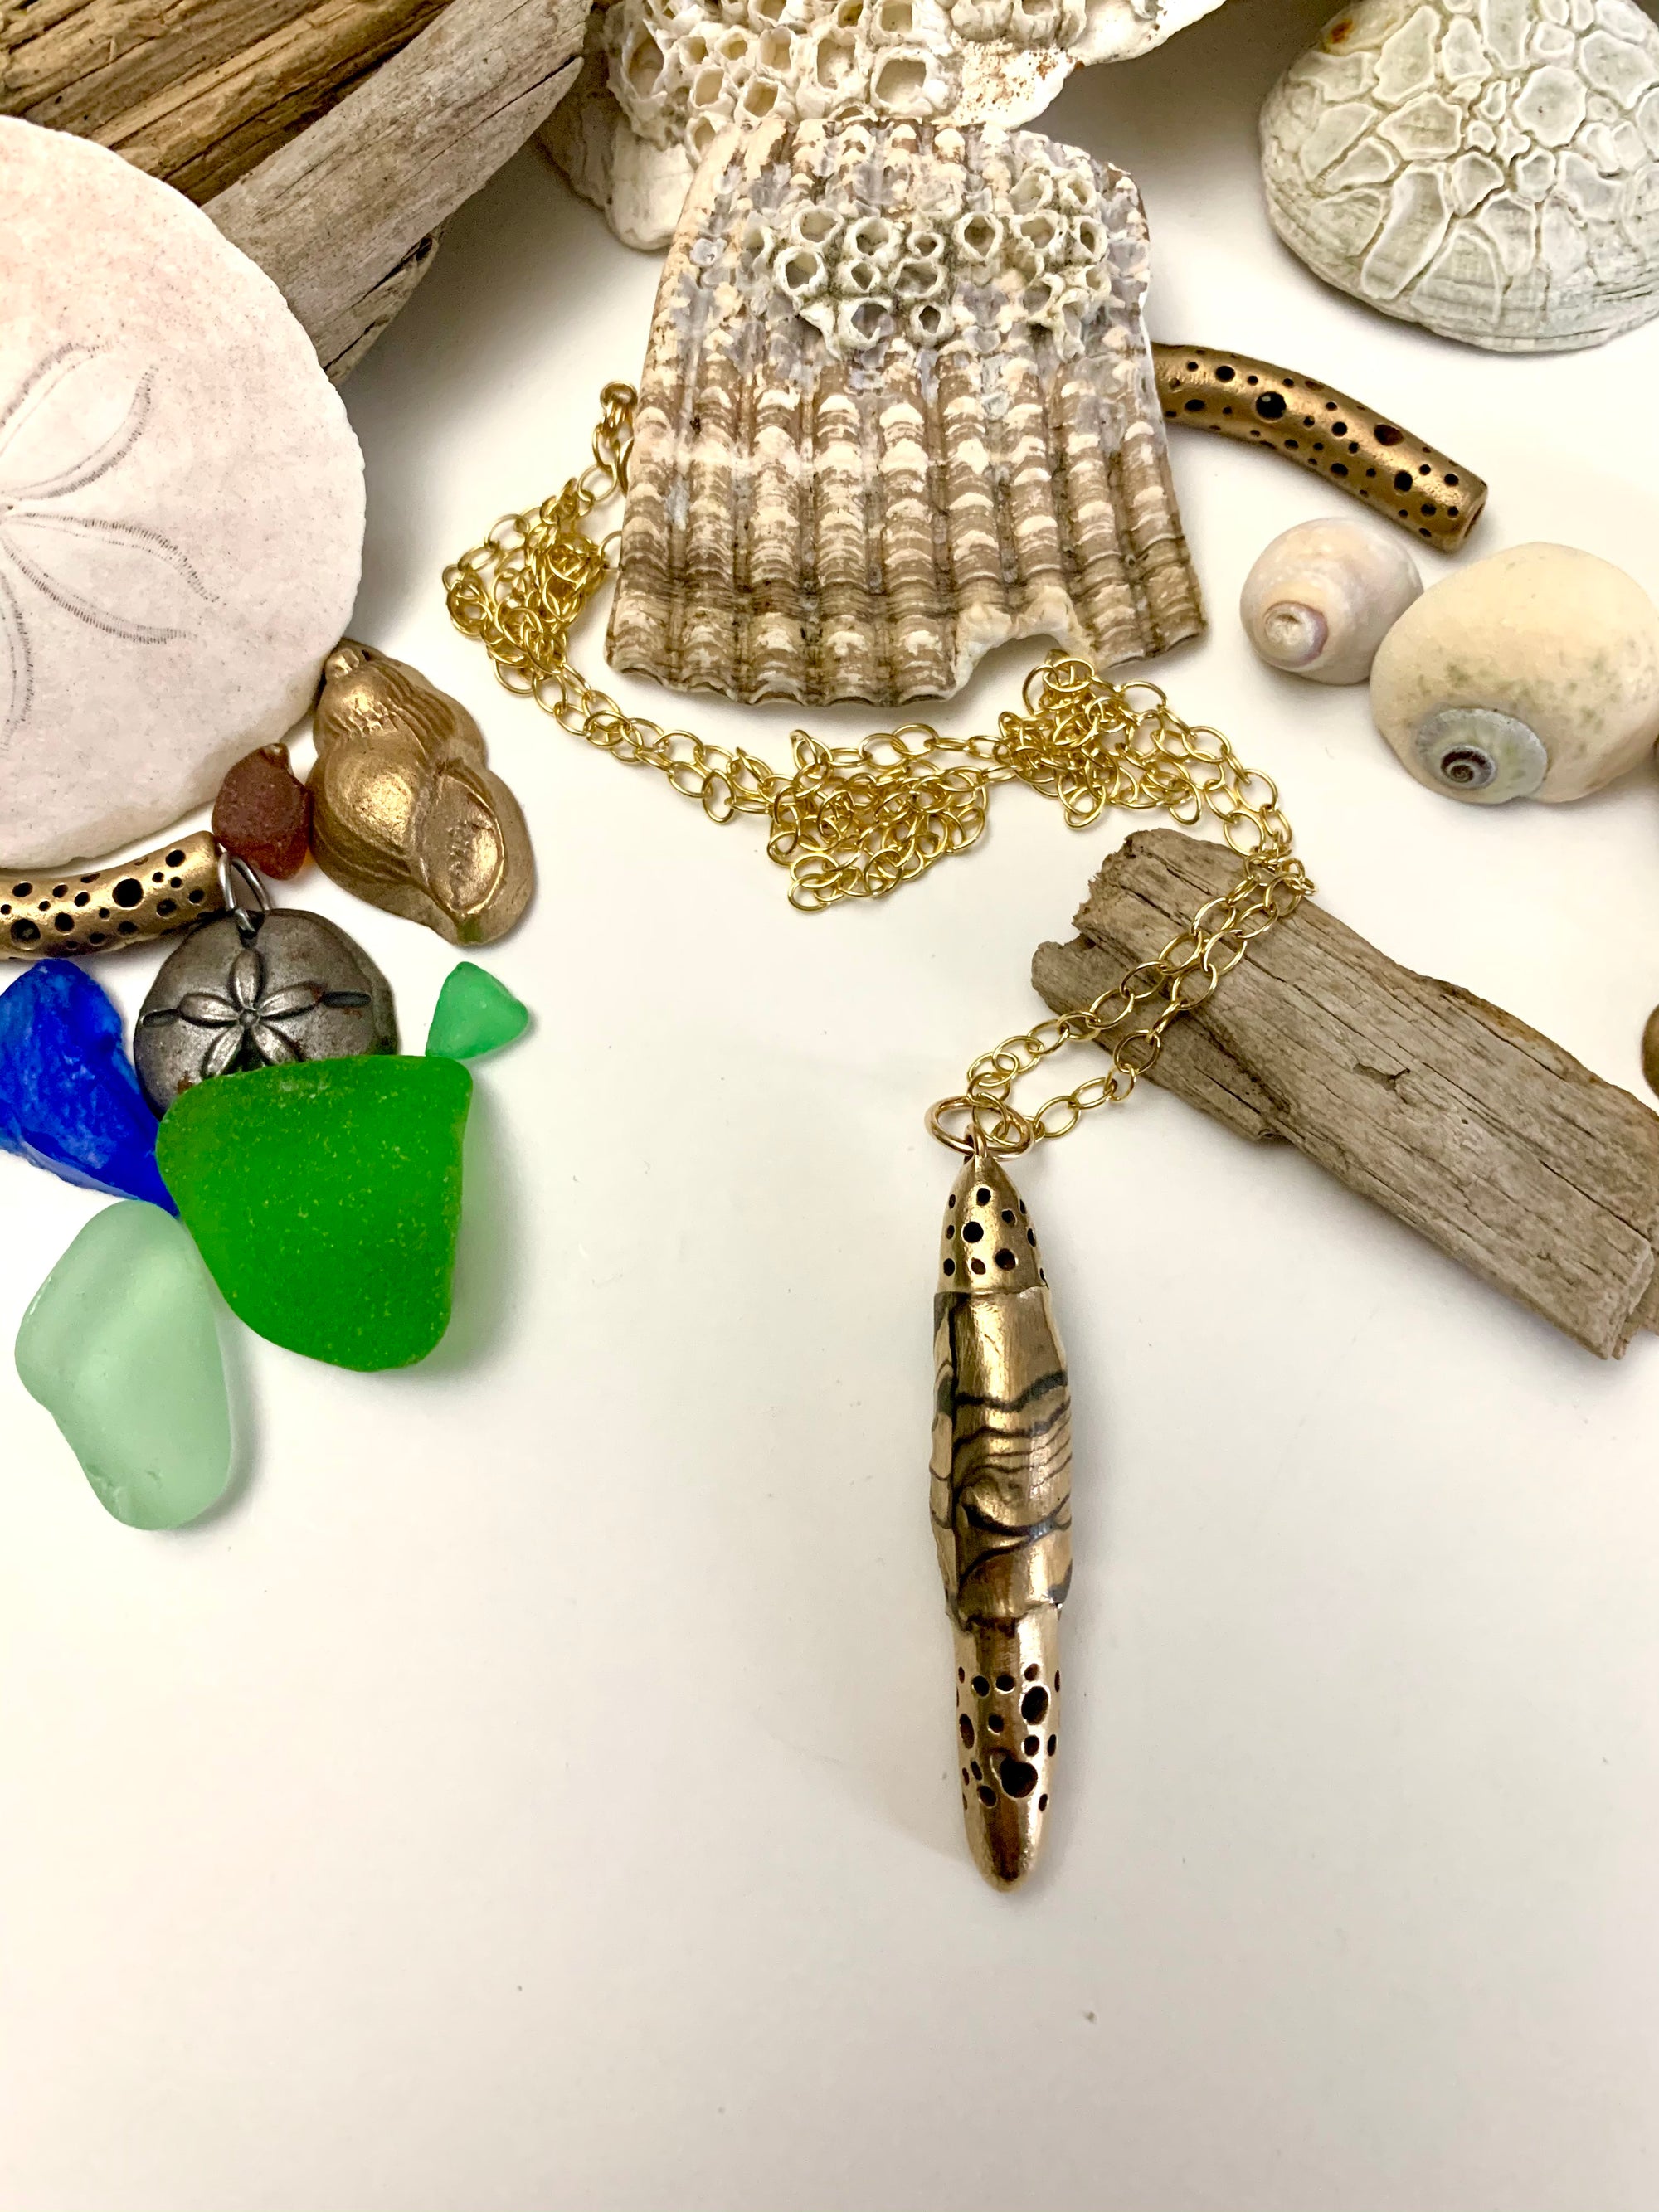 Sea shells with sea glass and bronze art jewelry